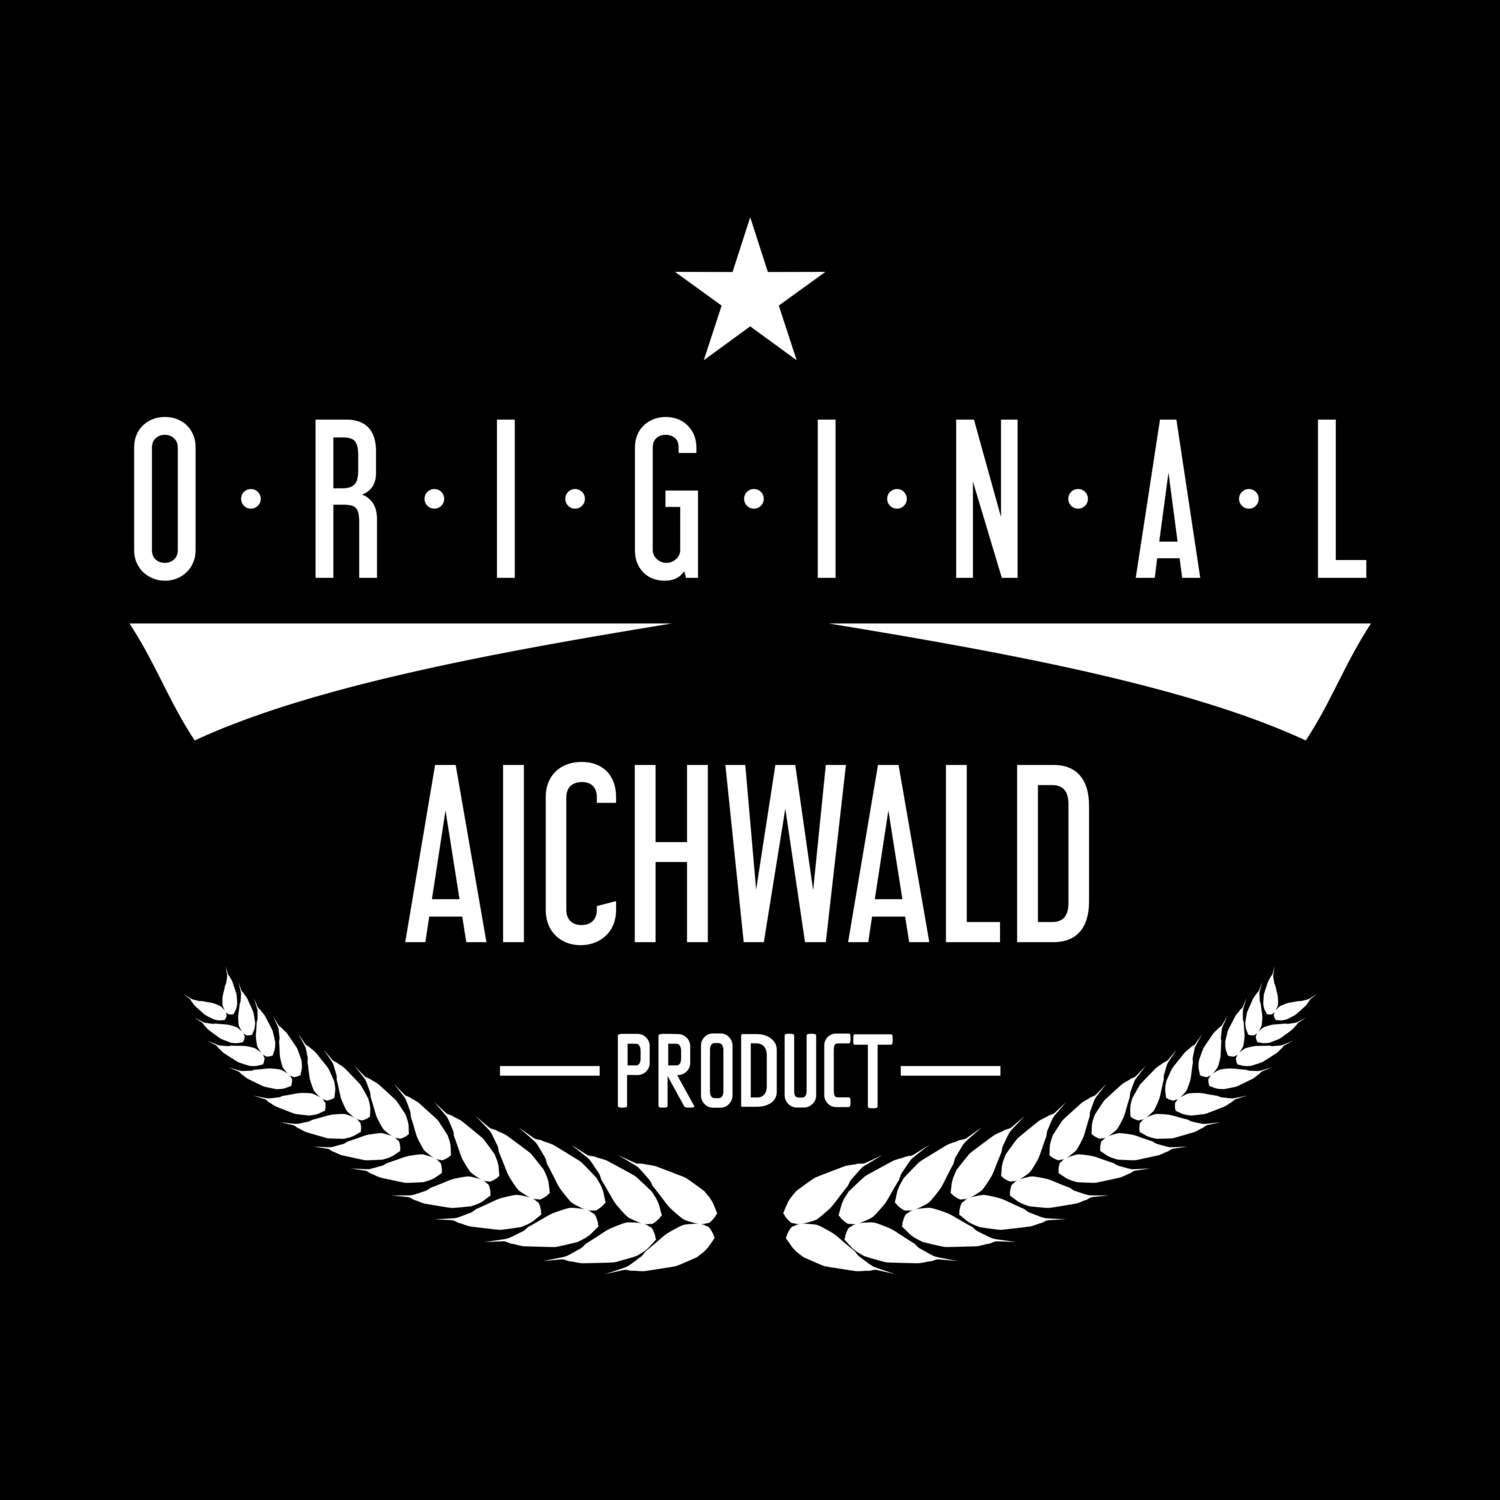 Aichwald T-Shirt »Original Product«